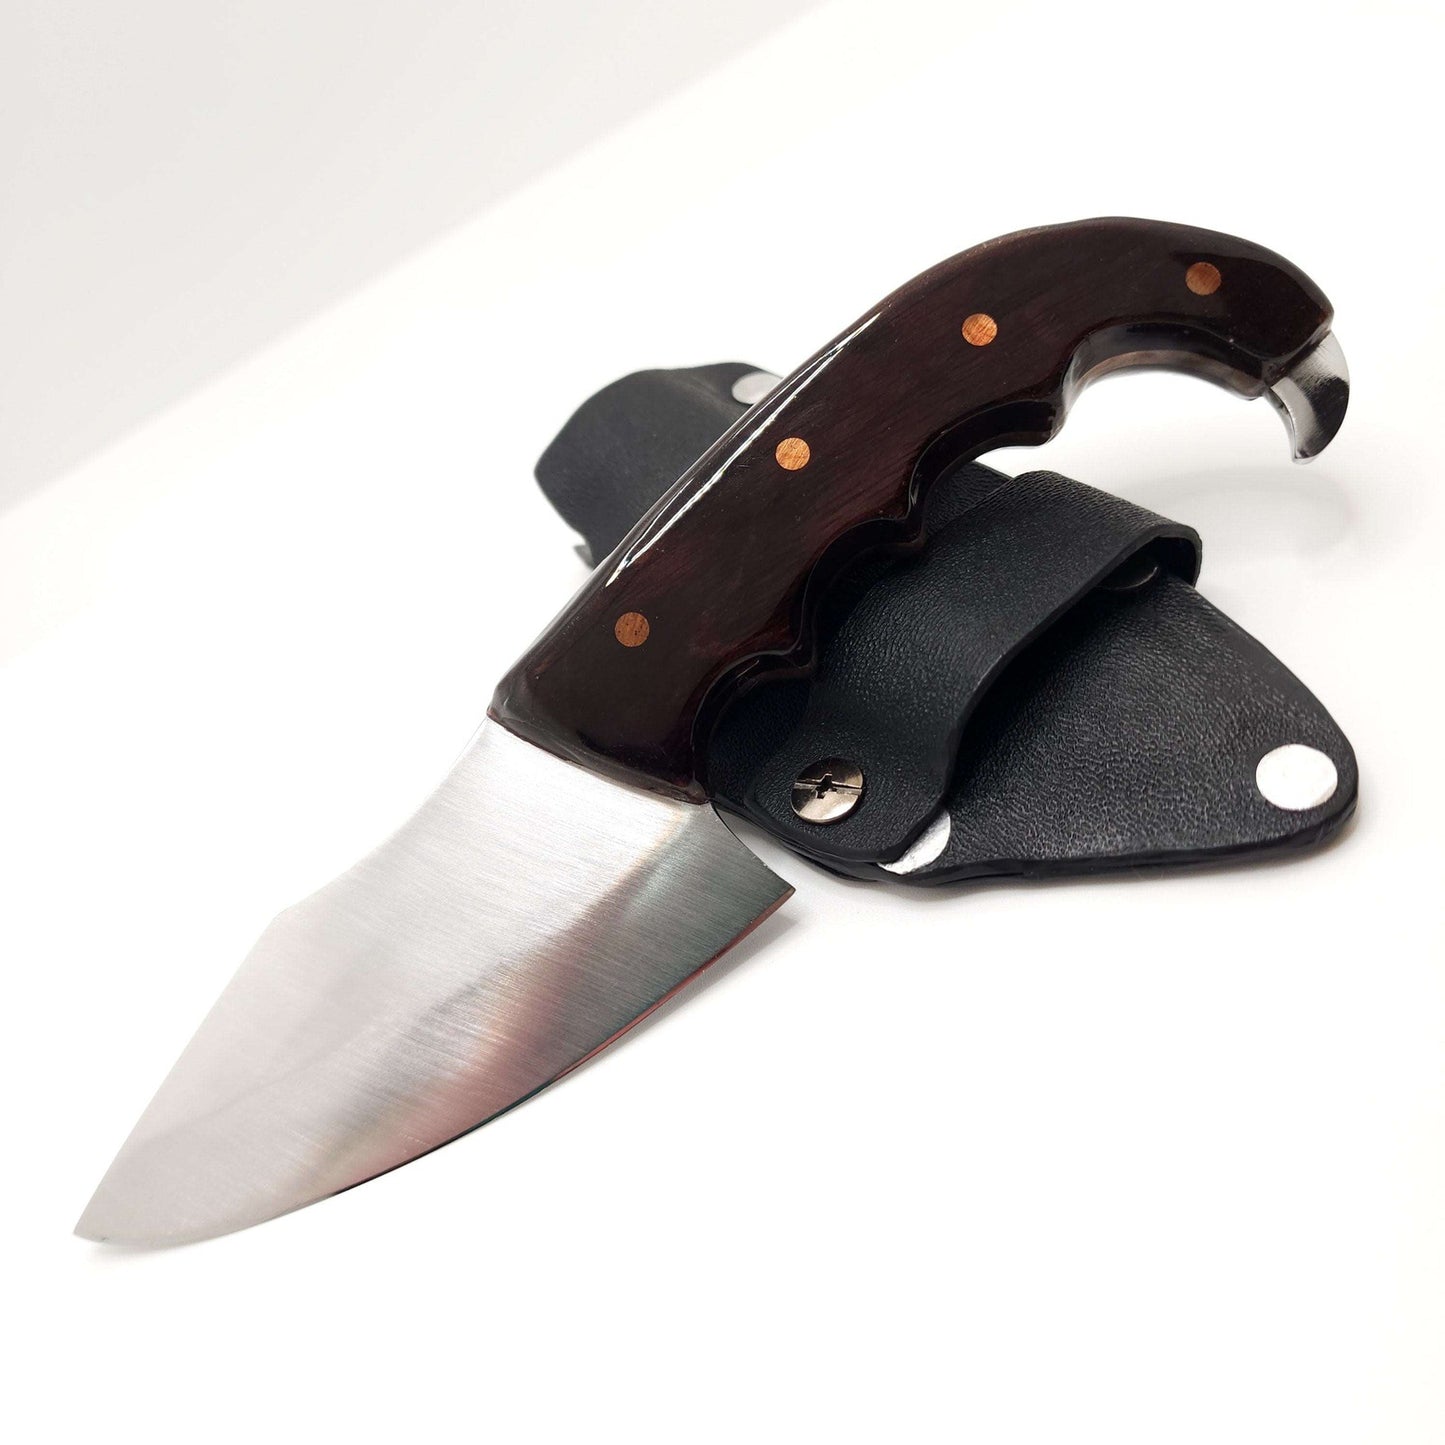 Hand Made Knife w/ Finger-Grip Full Tang Handle & Kydex Sheath - Made In USA shop.AxeDr.com Handmade Knife, Handmade Knives